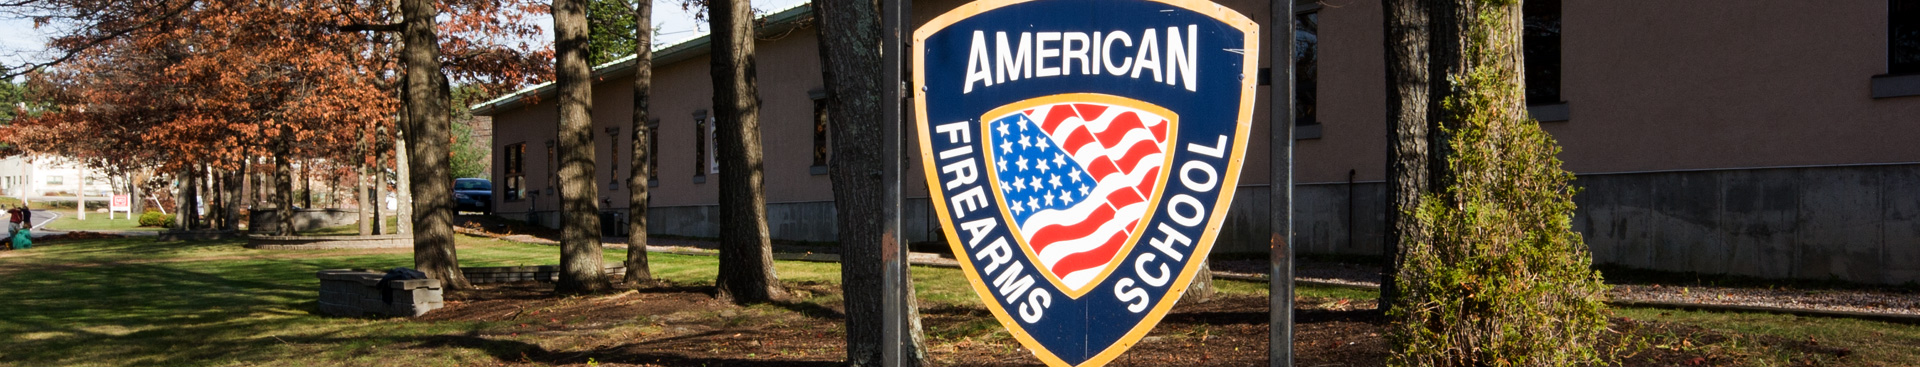 American Fireamrs School North Attleboro, MA